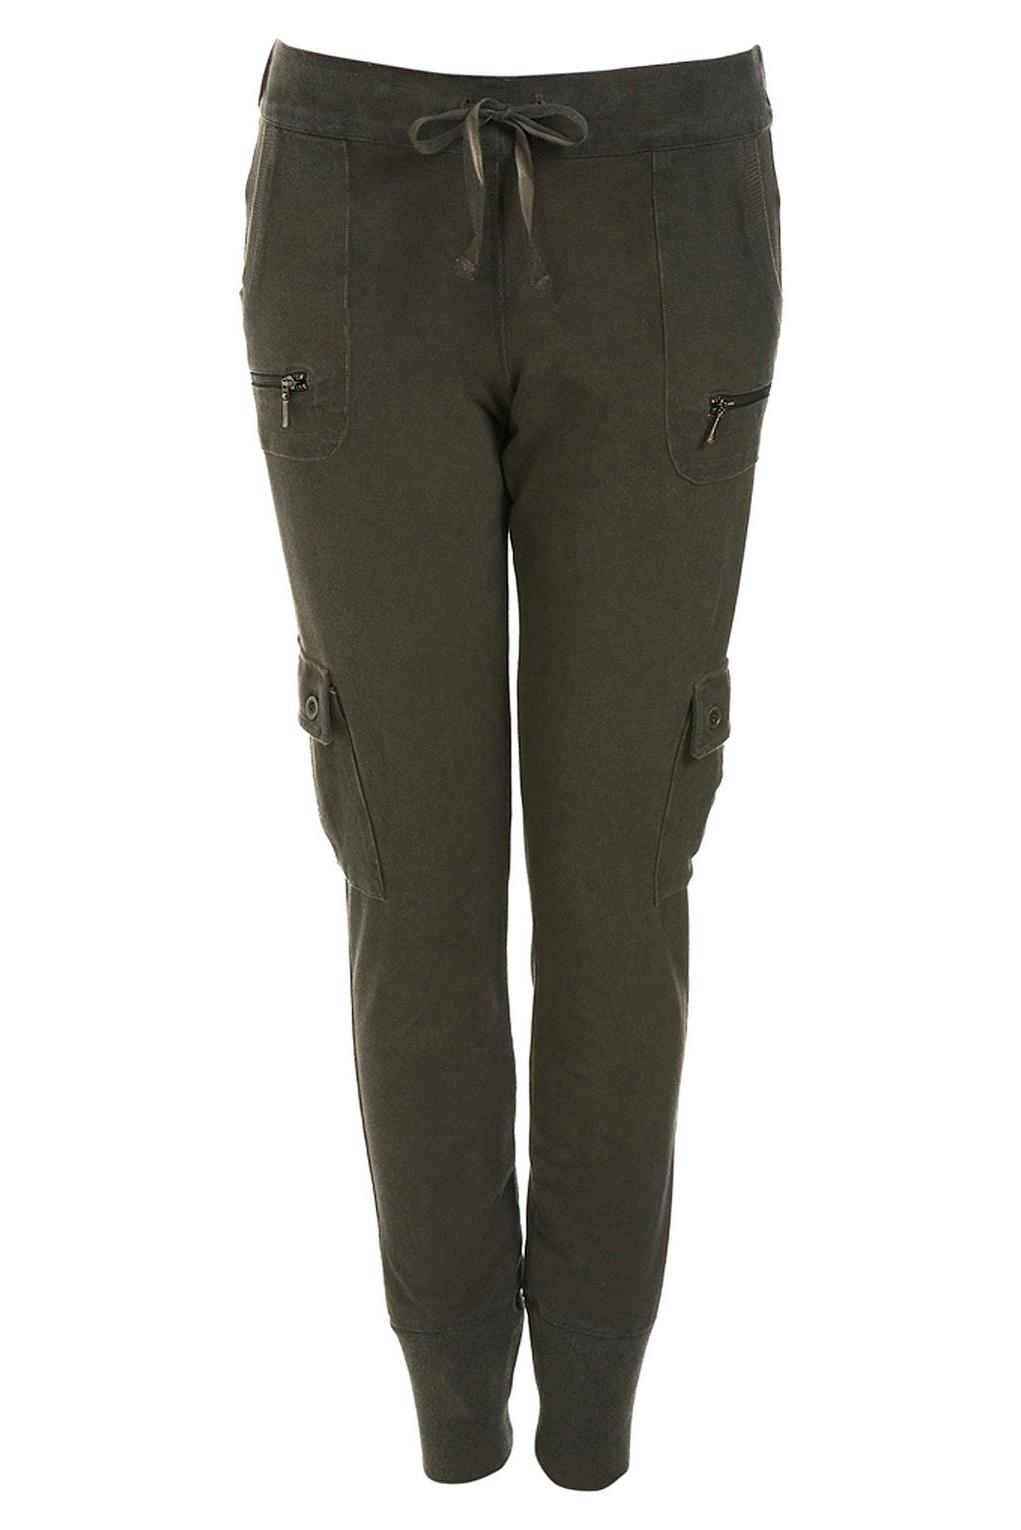 Top five: Khaki cargo trousers